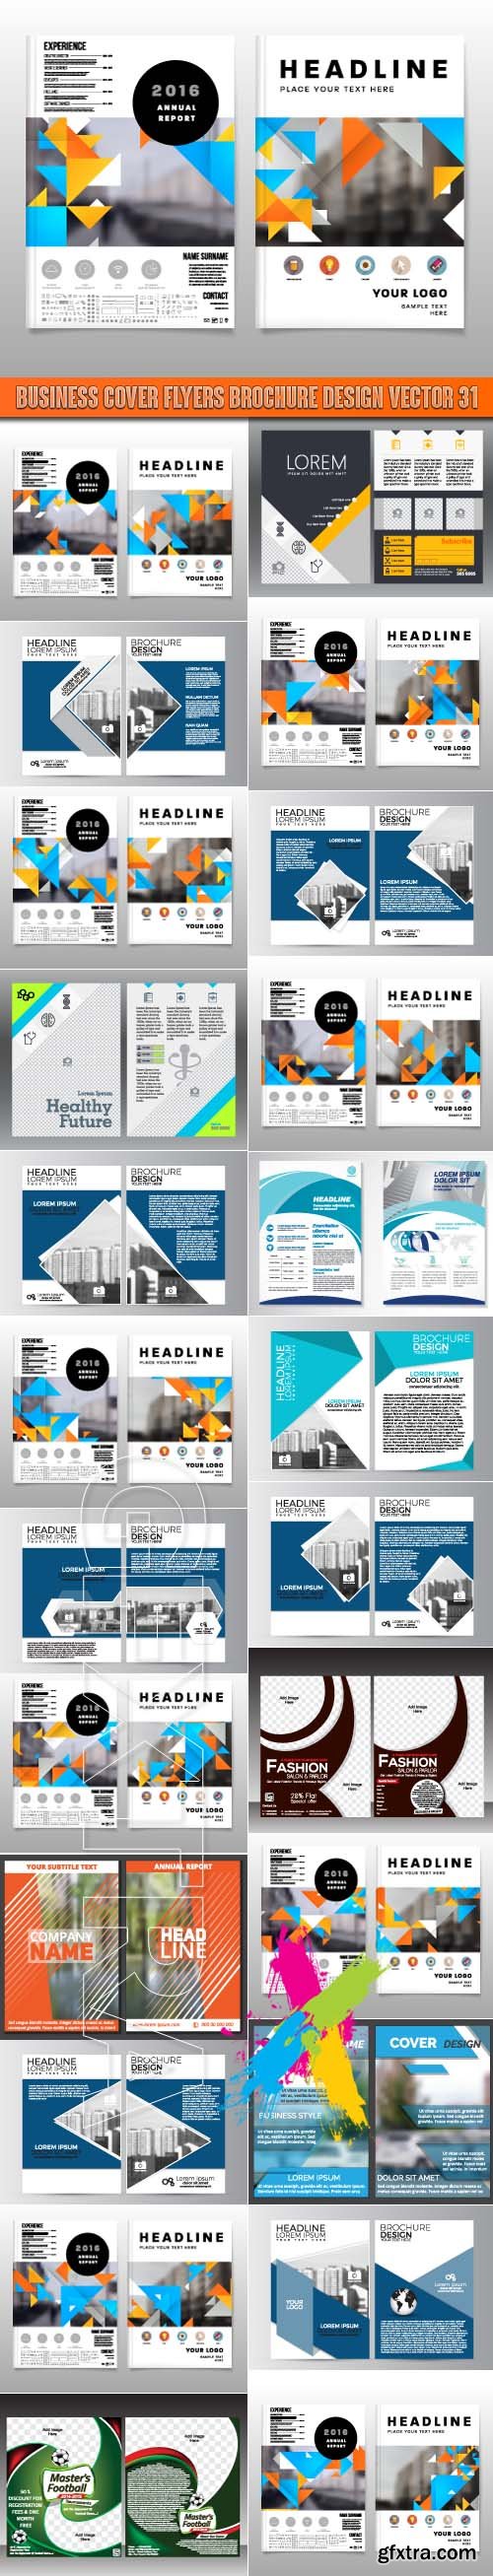 Business cover flyers brochure design vector 31